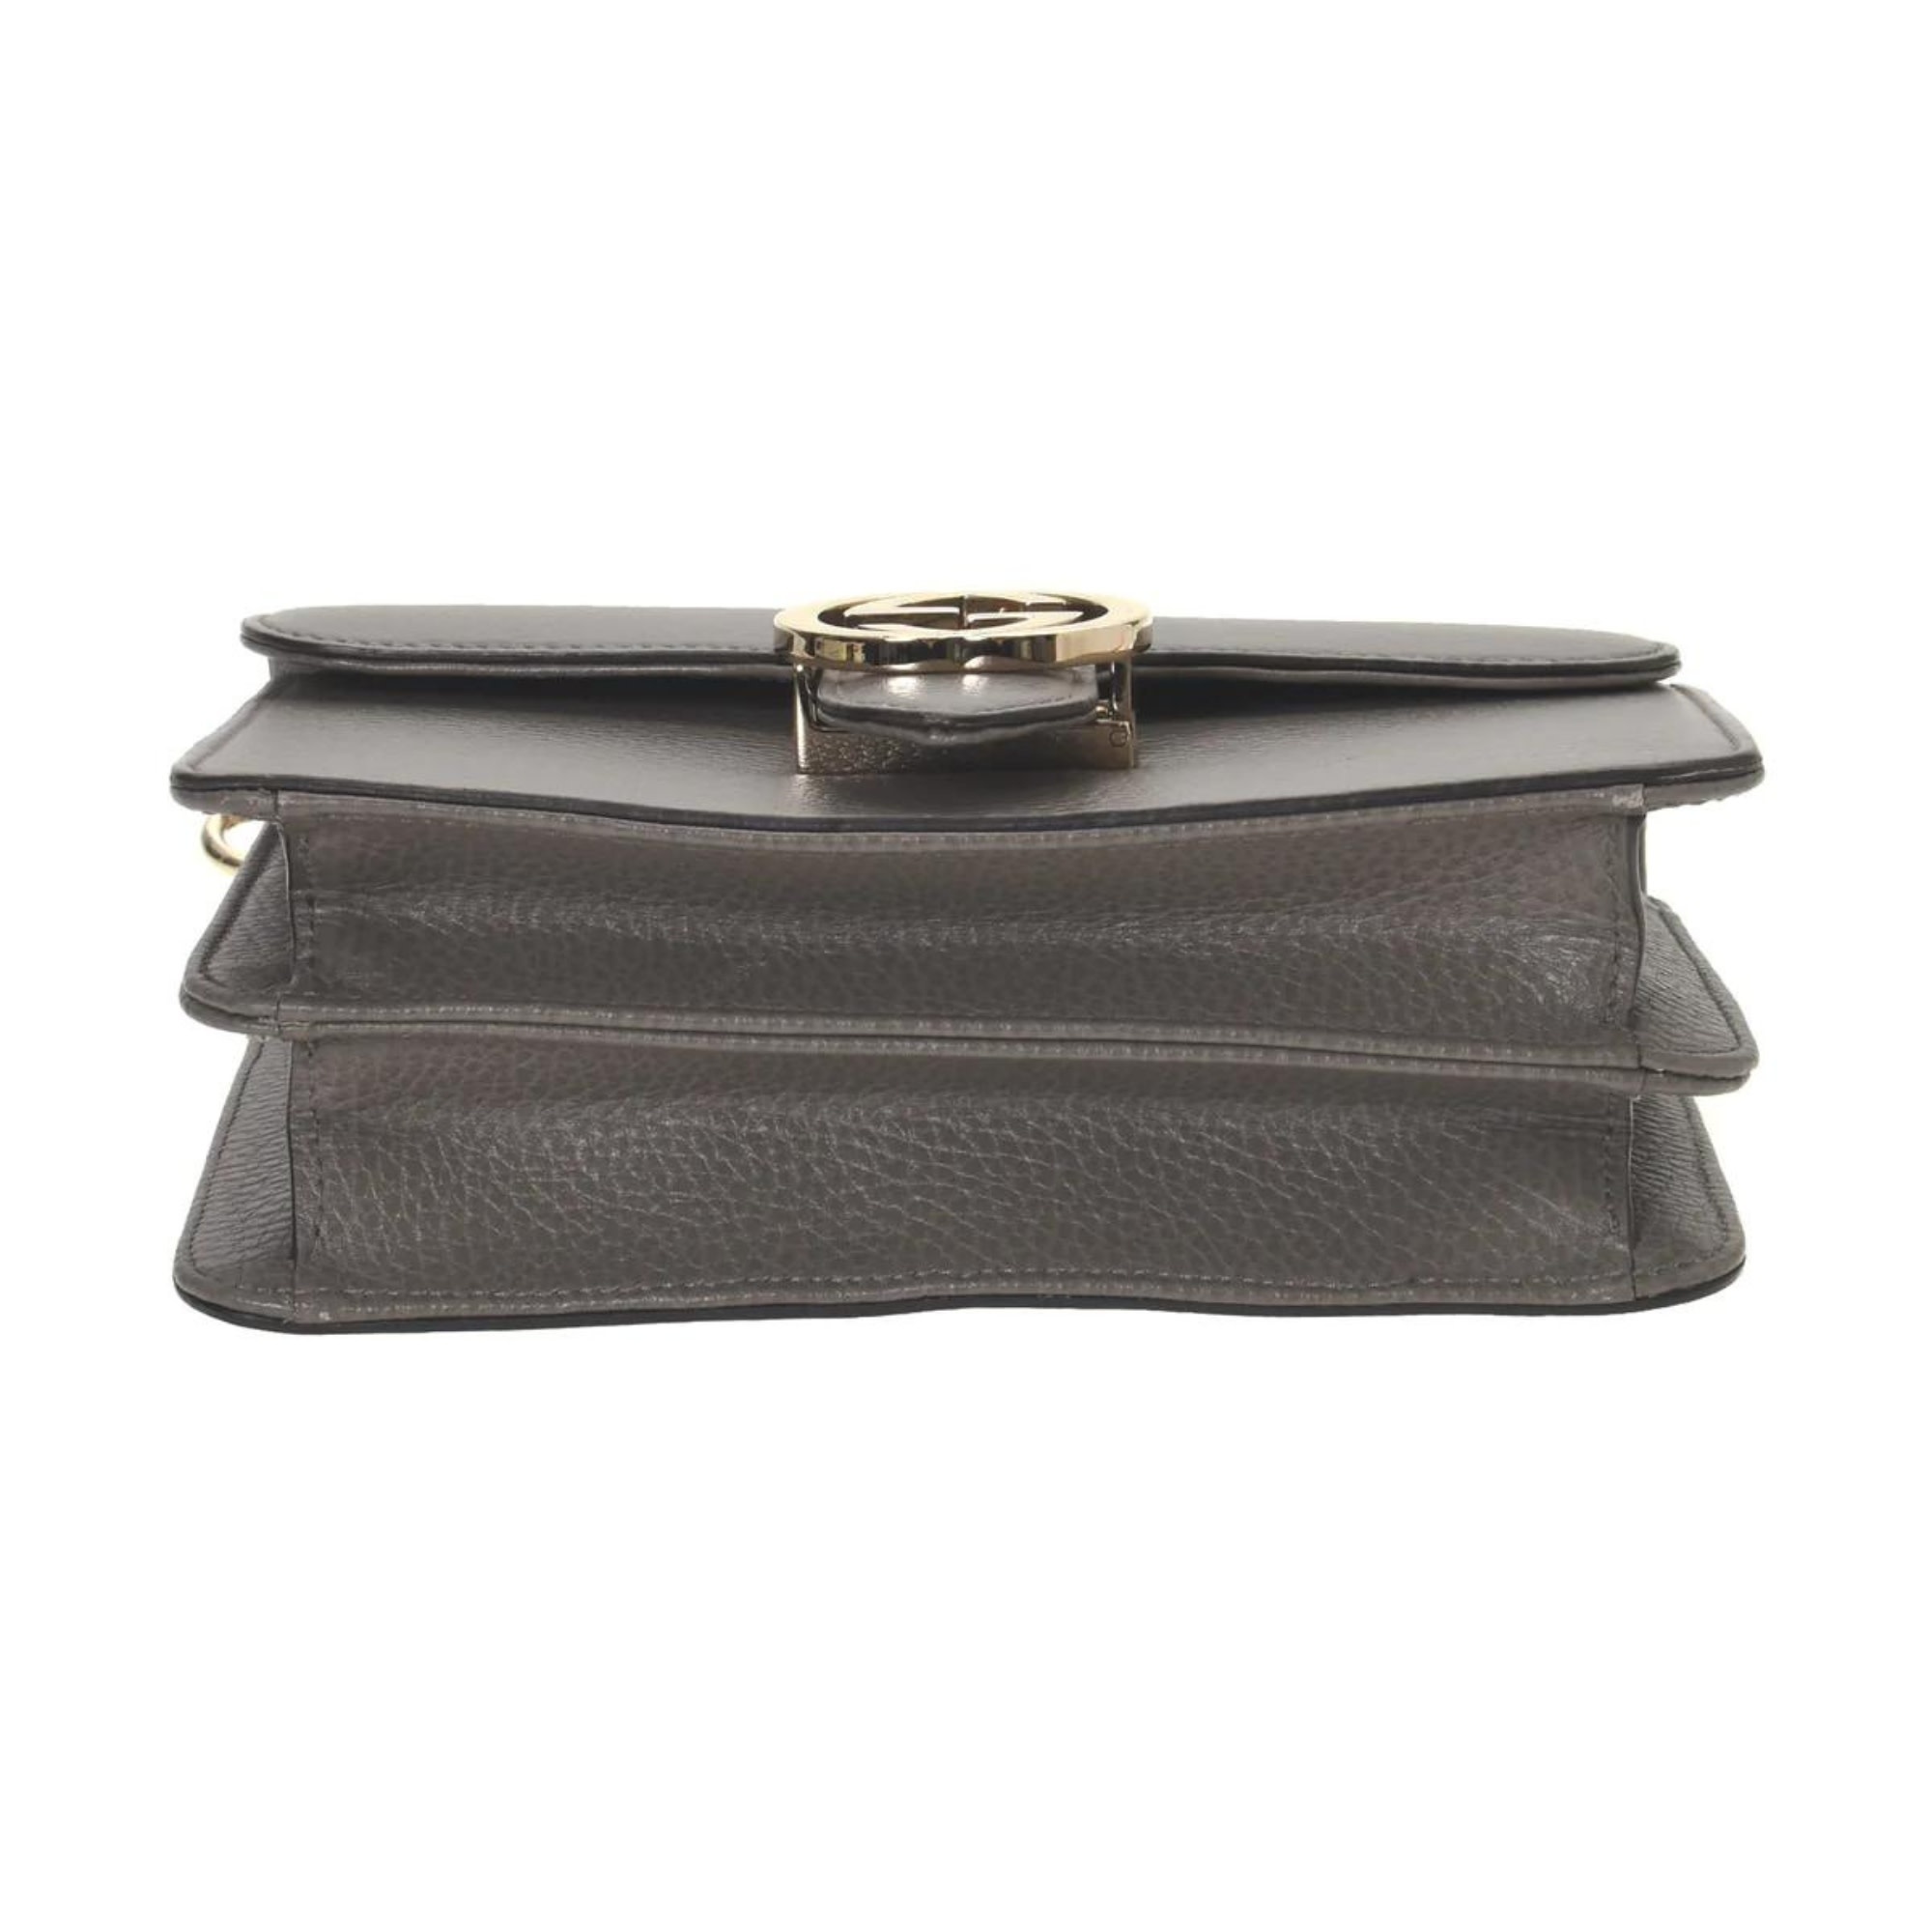 Gucci Interlocking BLACK Marmont Leather Silver Handbag Italy Chain 510304  NEW: Handbags